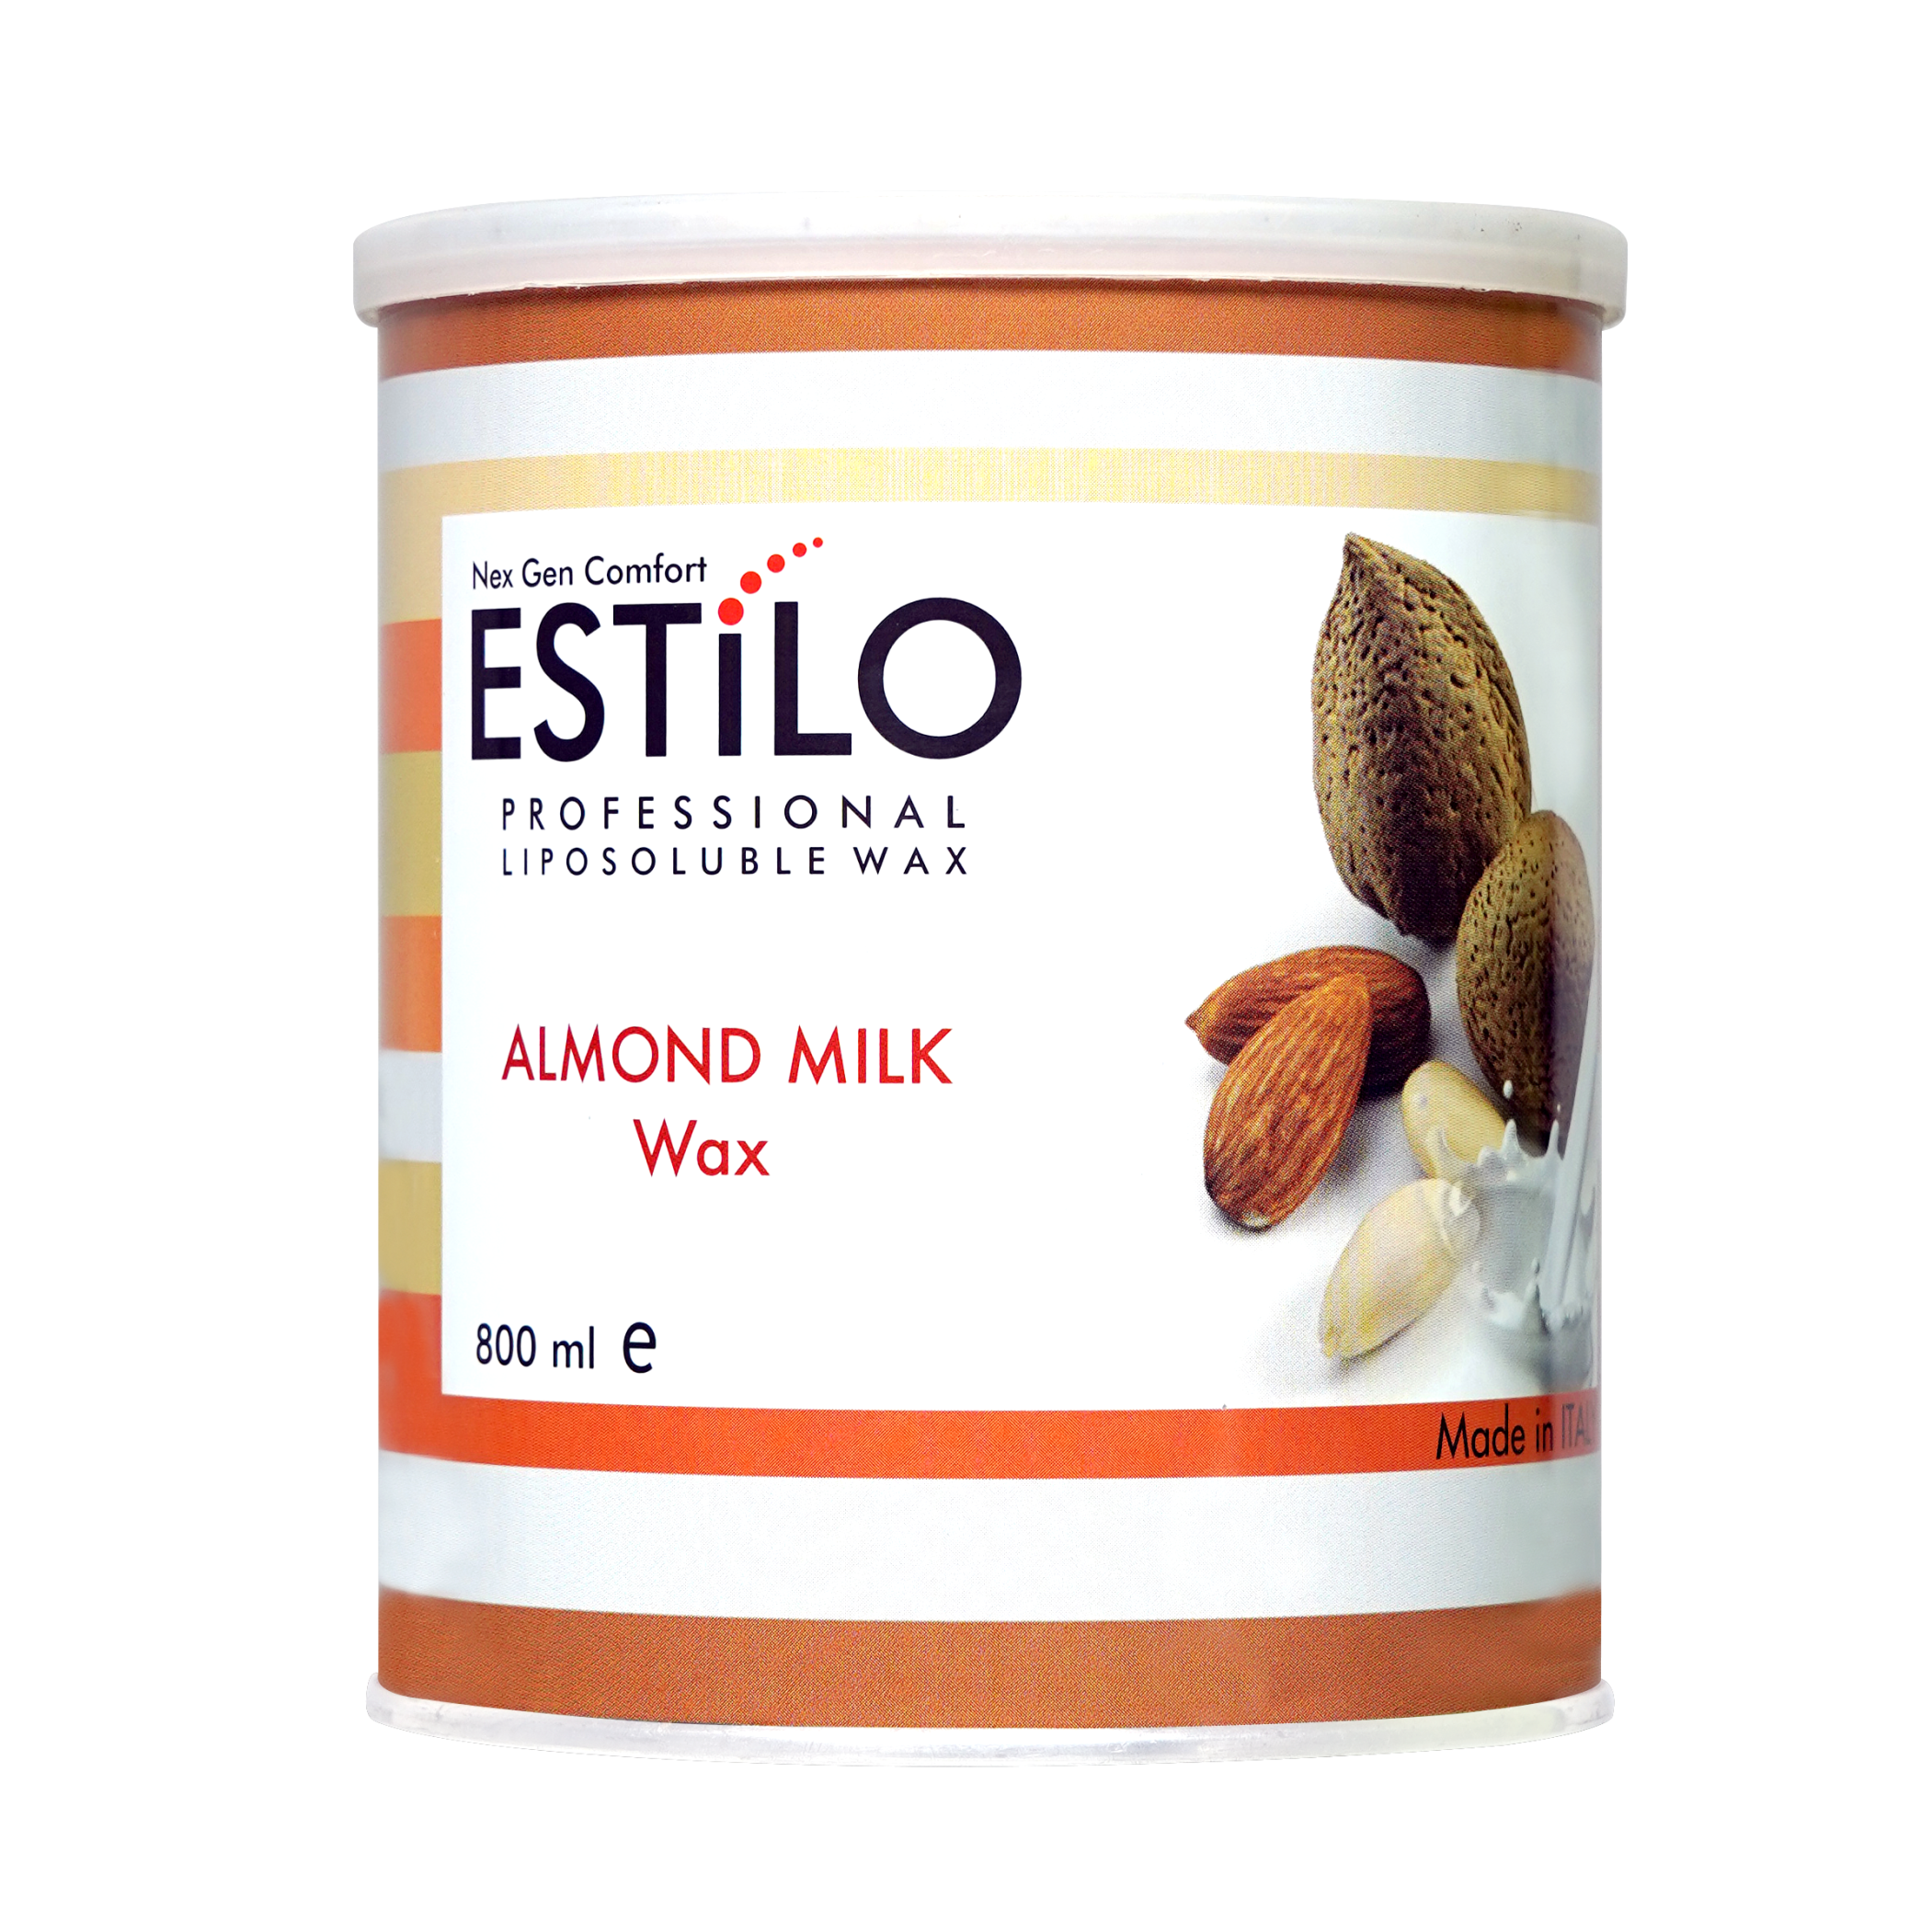 Estilo liposoluble almond milk wax for hair removal